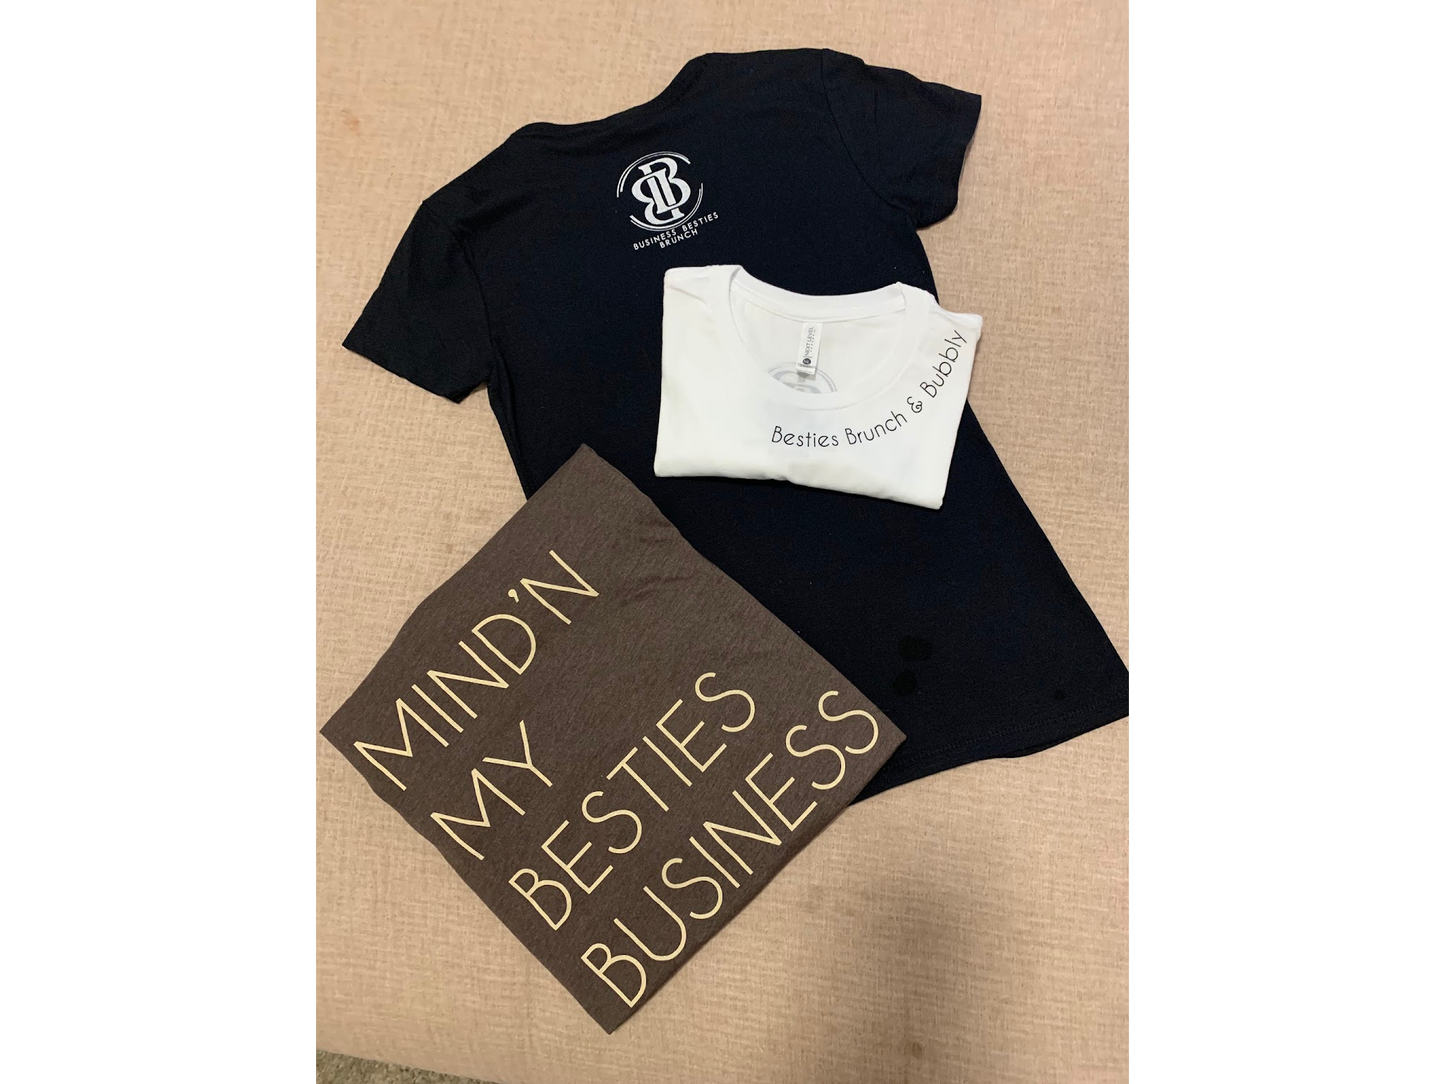 Business Besties Brunch Short Sleeved Mind'n My Besties Business T-Shirt